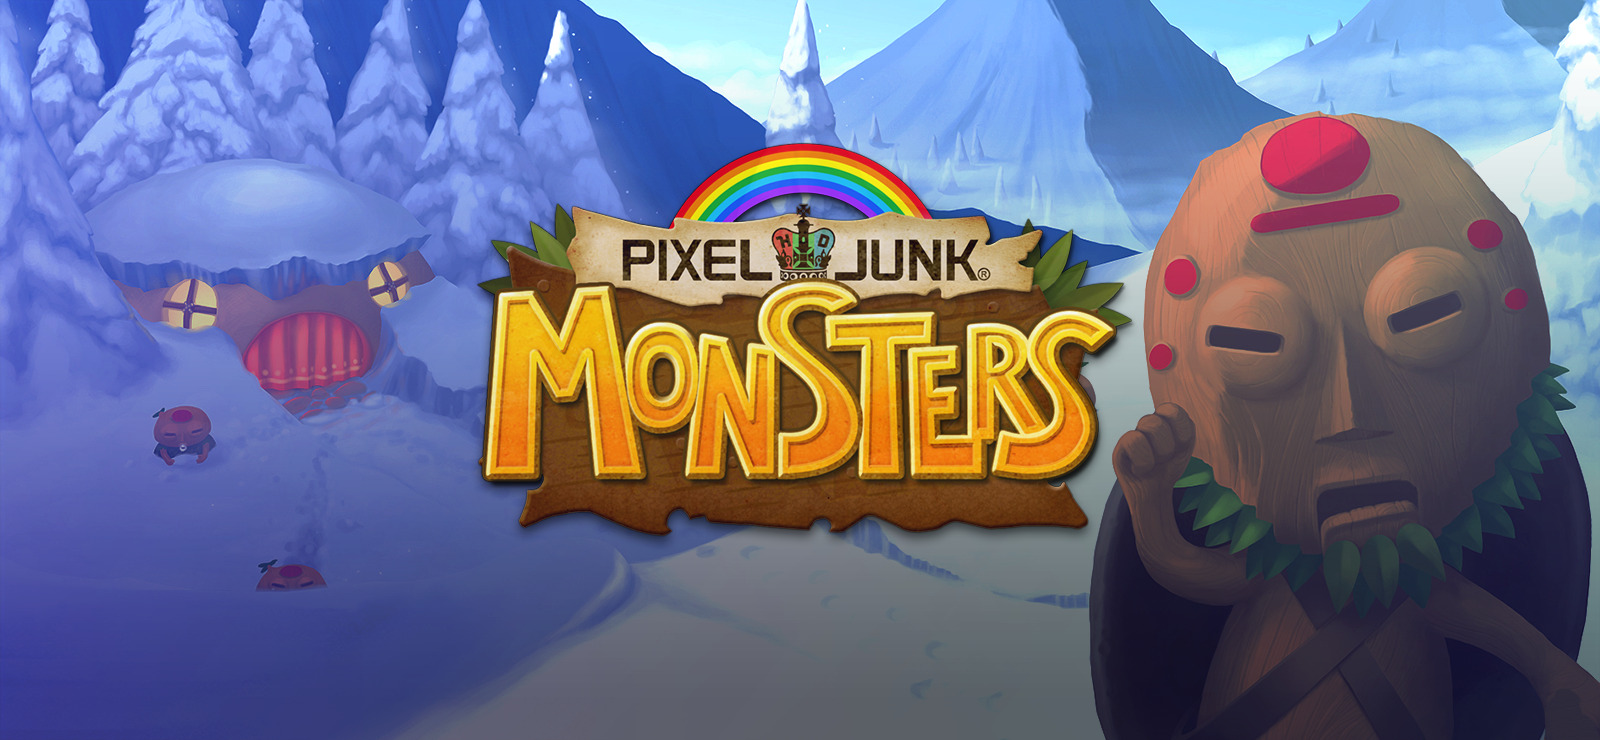 Hands On: PixelJunk Monsters Deluxe, Tower Defense on the Go